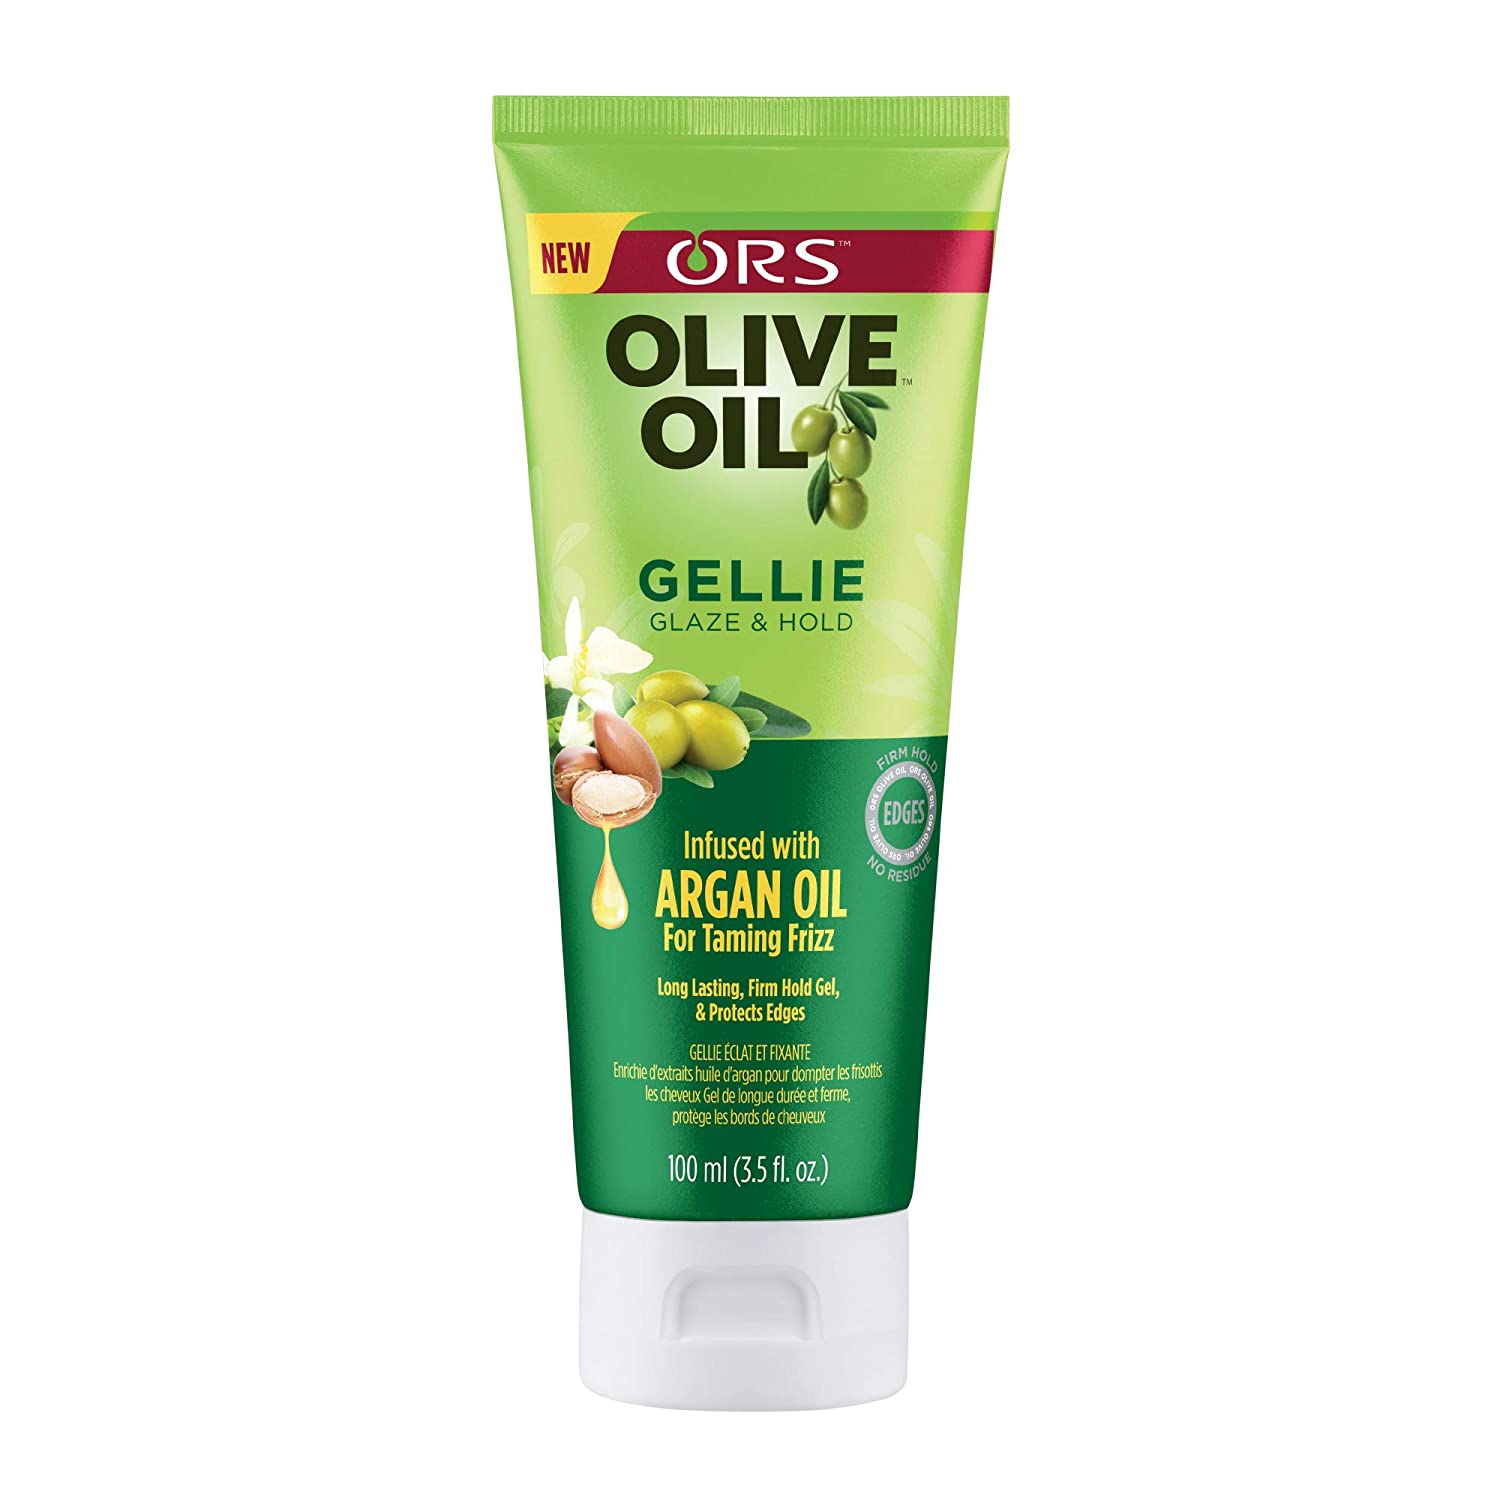 ORS Olive Oil - Gellie Glaze & Hold